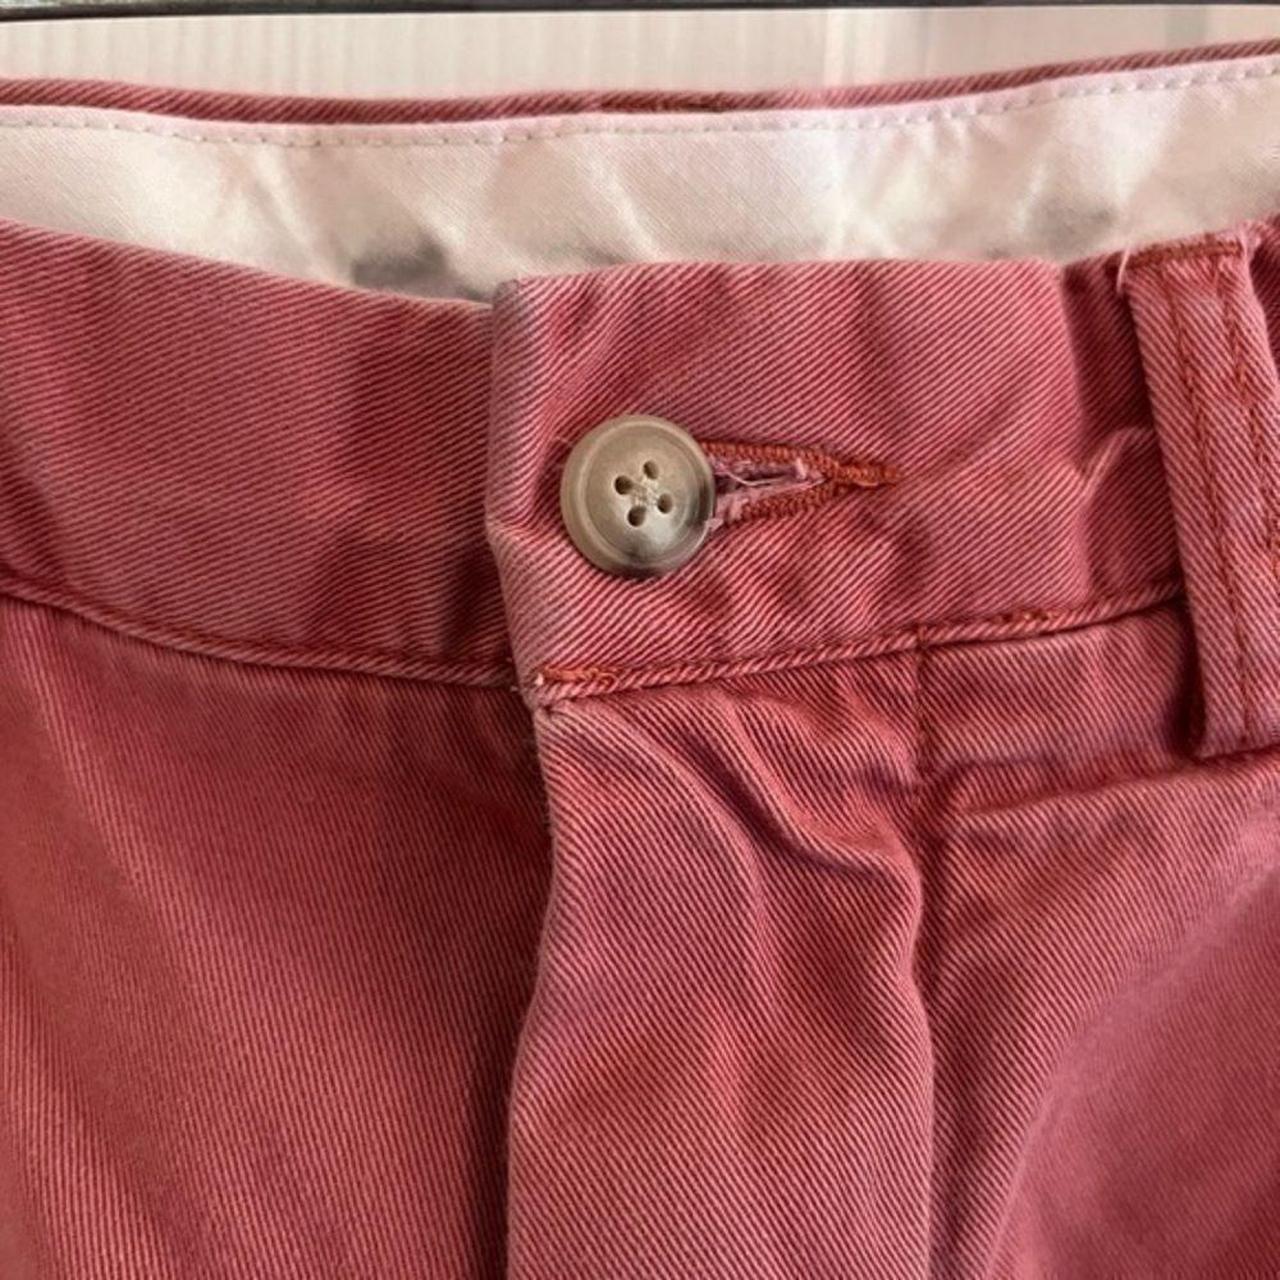 Product Image 4 - Ralph Lauren Polo Pants. Great